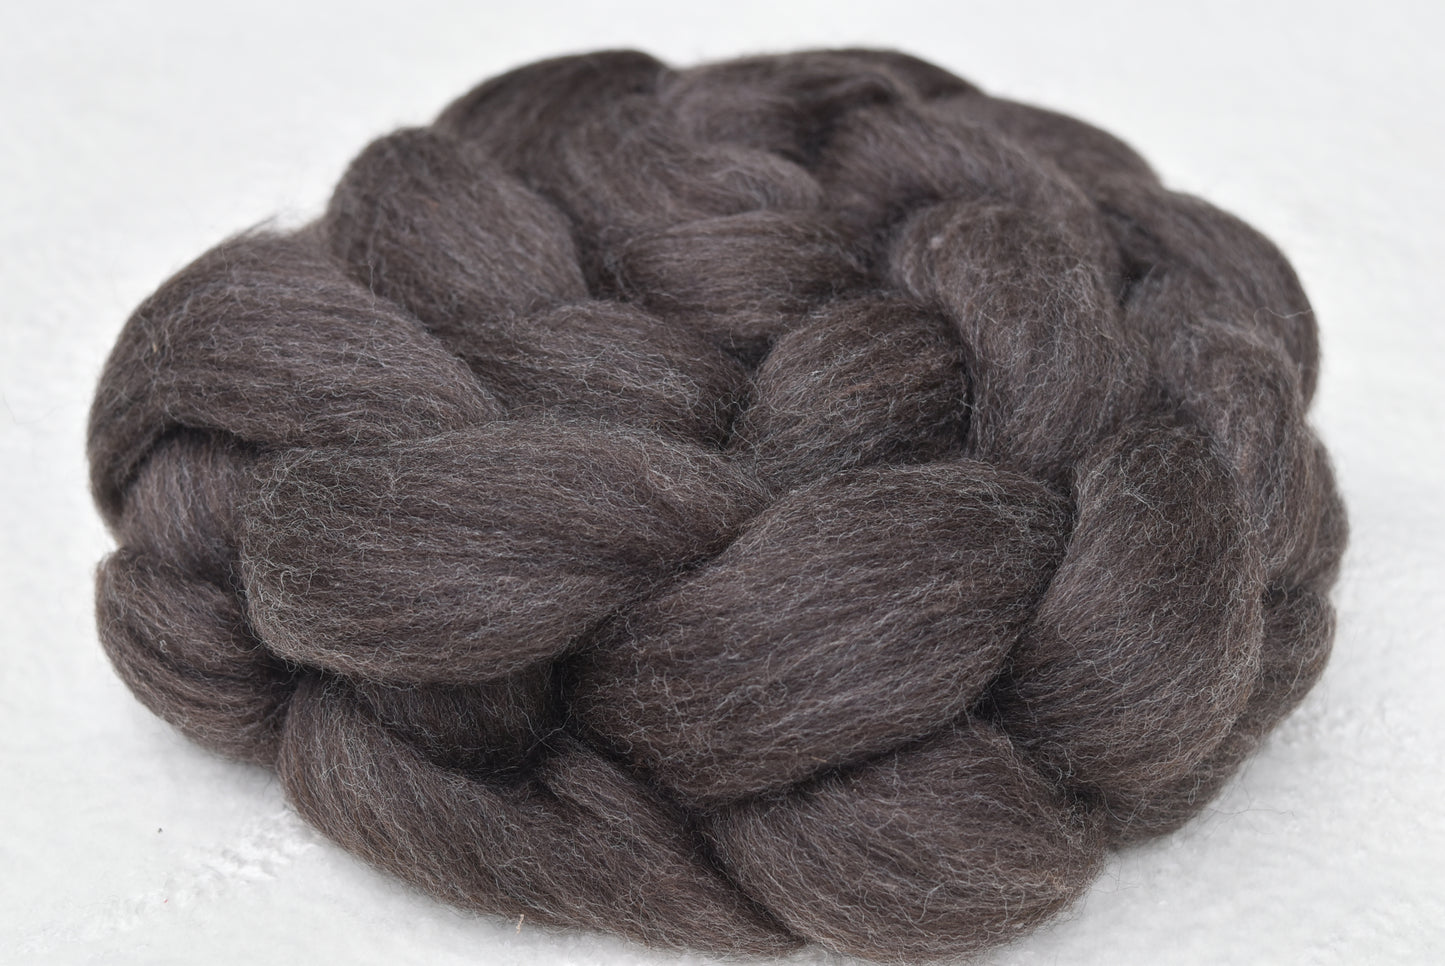 Chocolate Merino Corriedale and Black Alpaca Wool Top| Undyed Wool Roving Top | Sally Ridgway | Shop Wool, Felt and Fibre Online